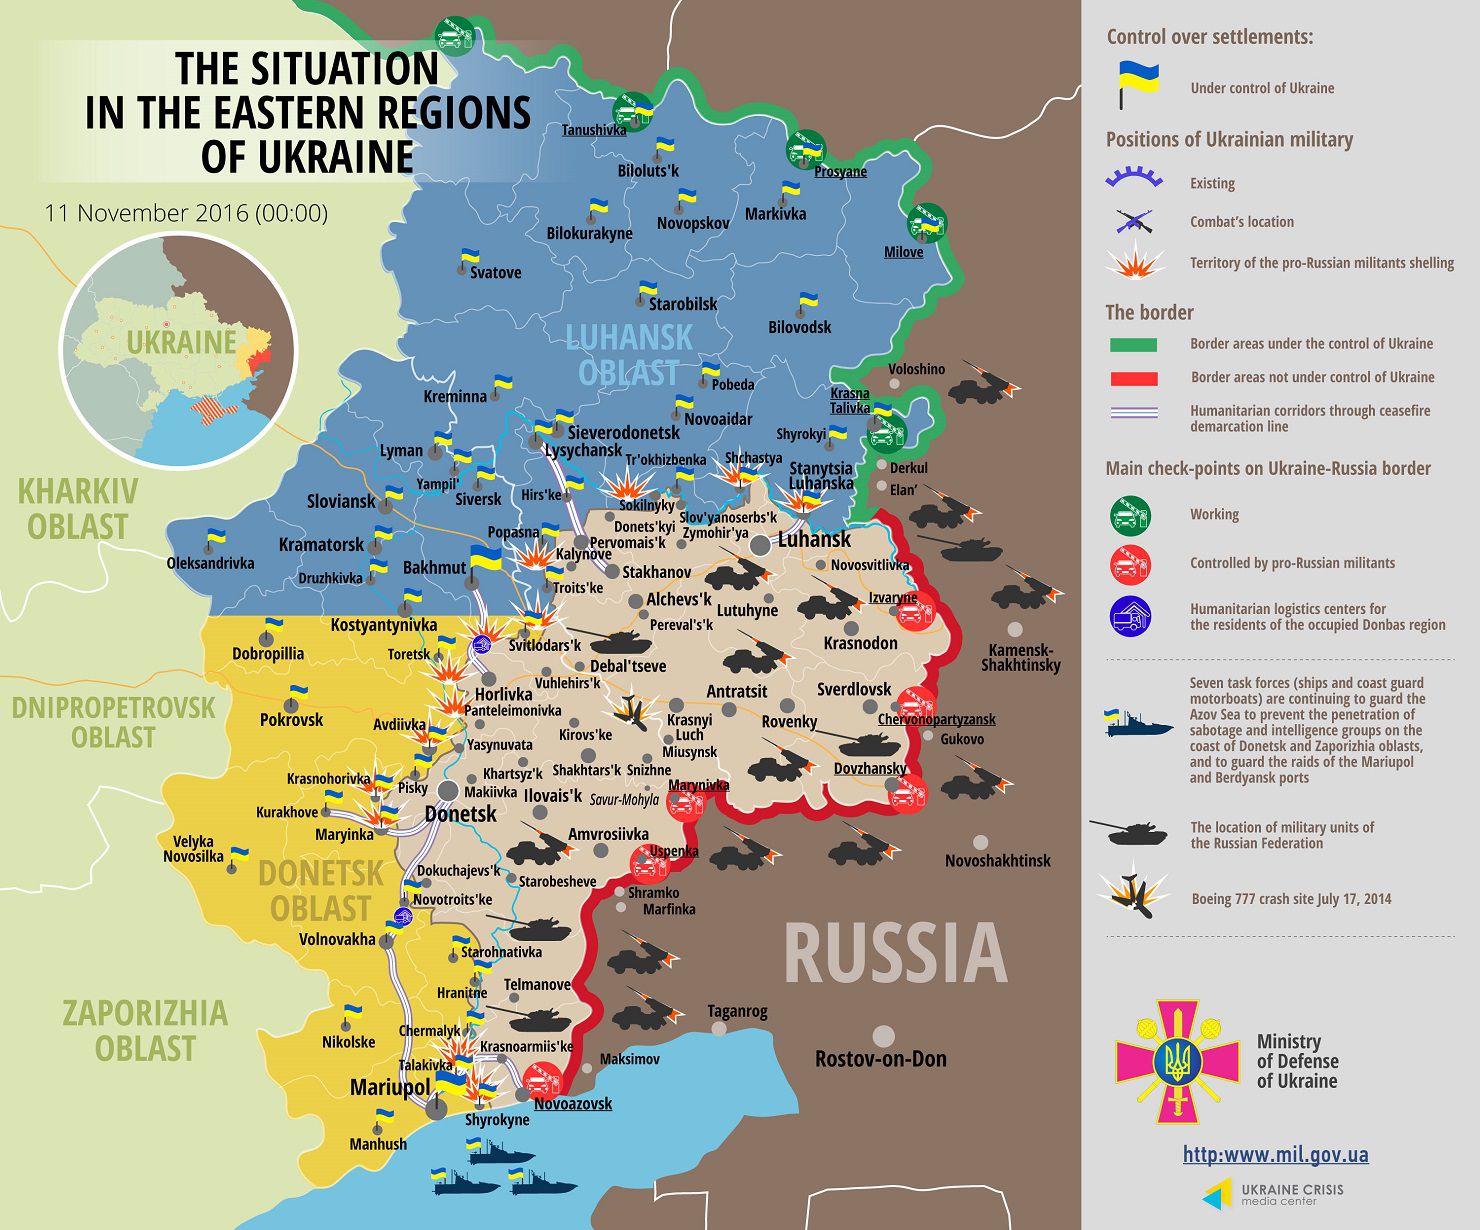 Russian militants attack Ukraine 35 times in last day, fire heavy artillery near Vodiane